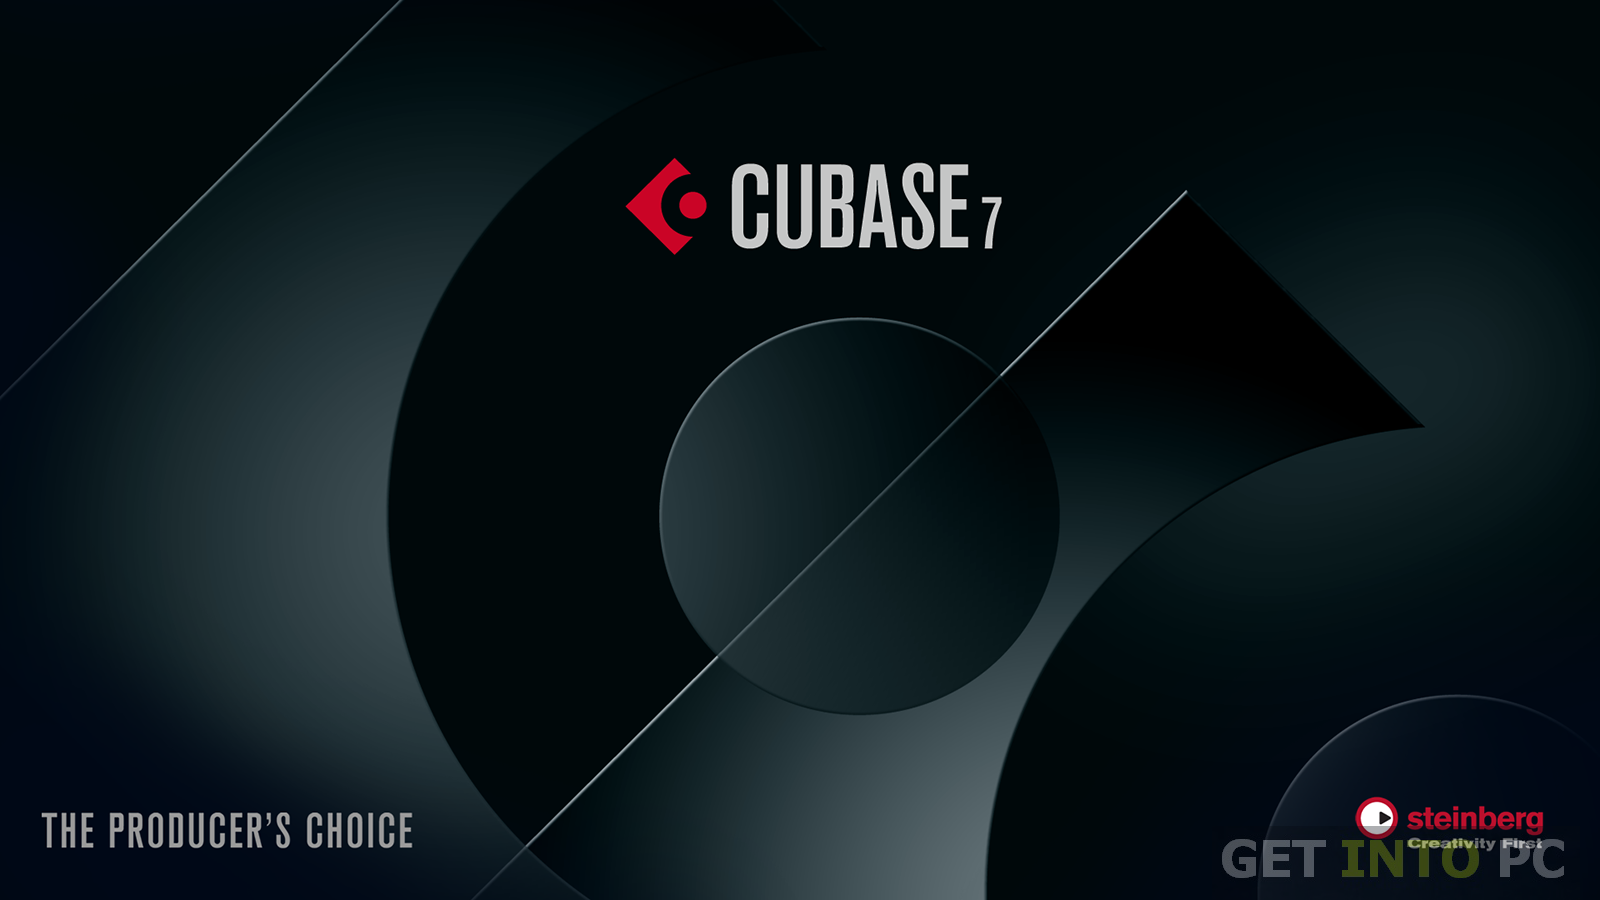 Cubase 7 Digital music software